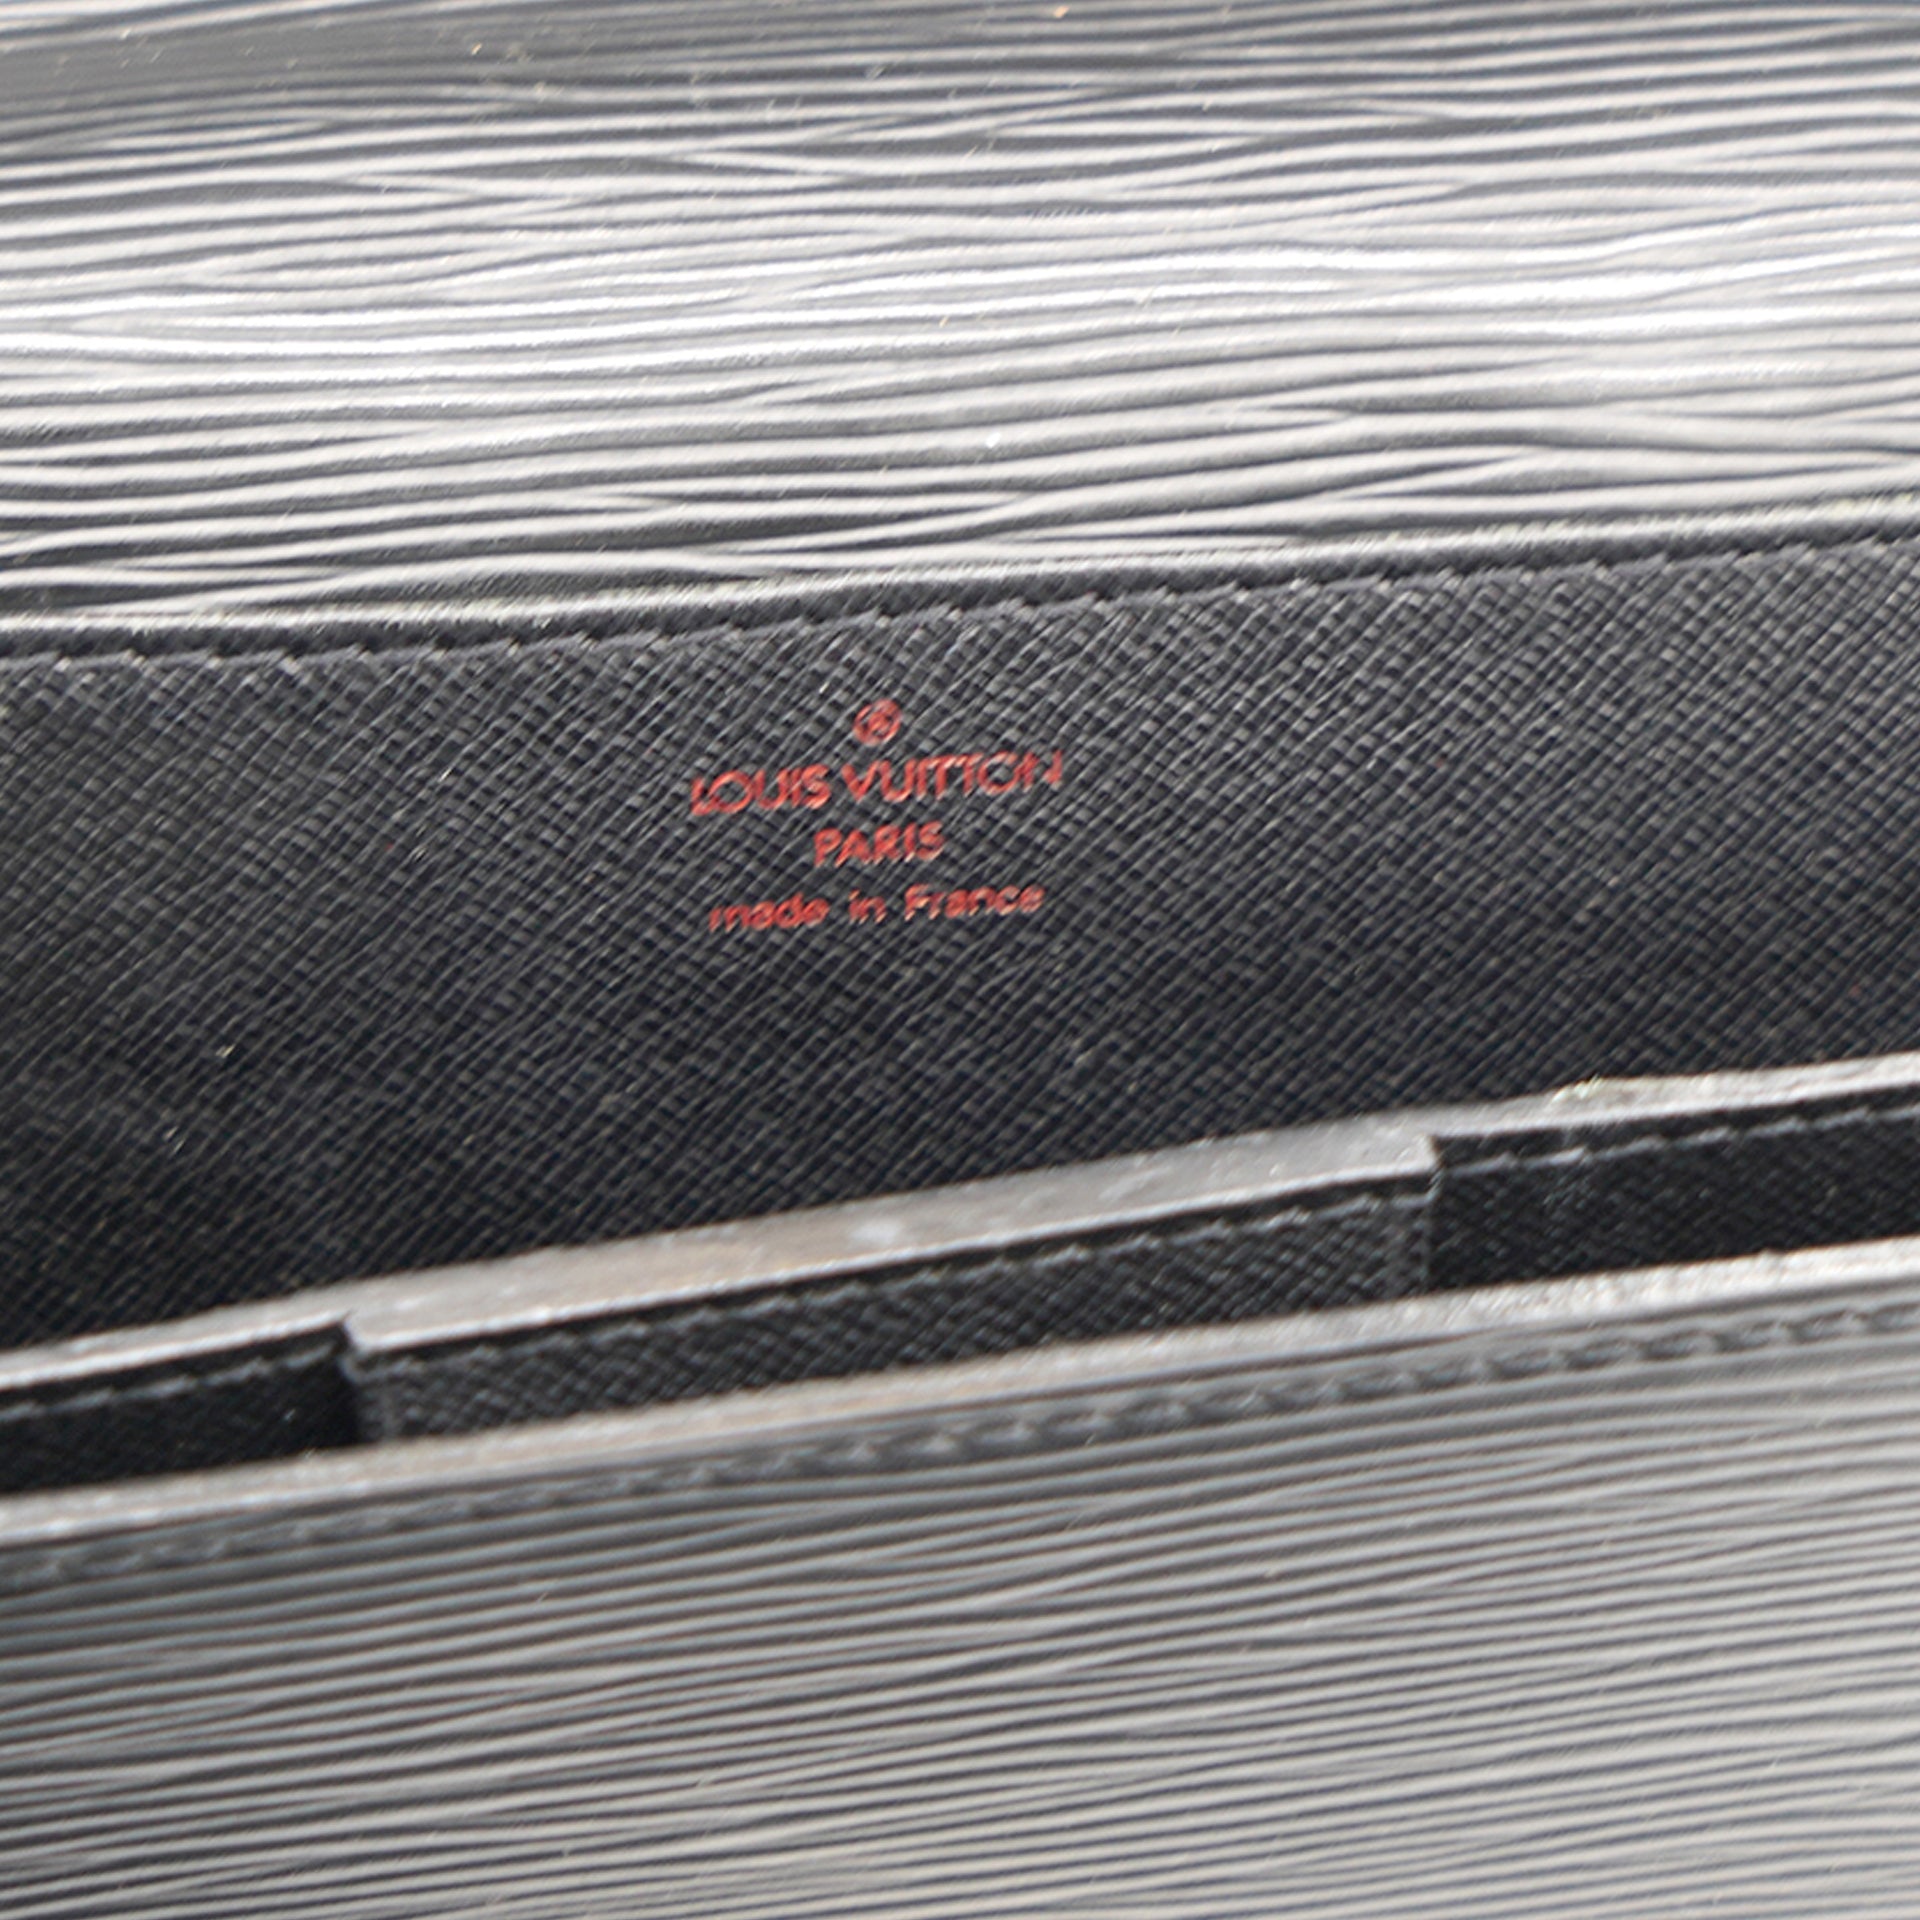 Louis Vuitton Epi Leather Ambassador Briefcase Black